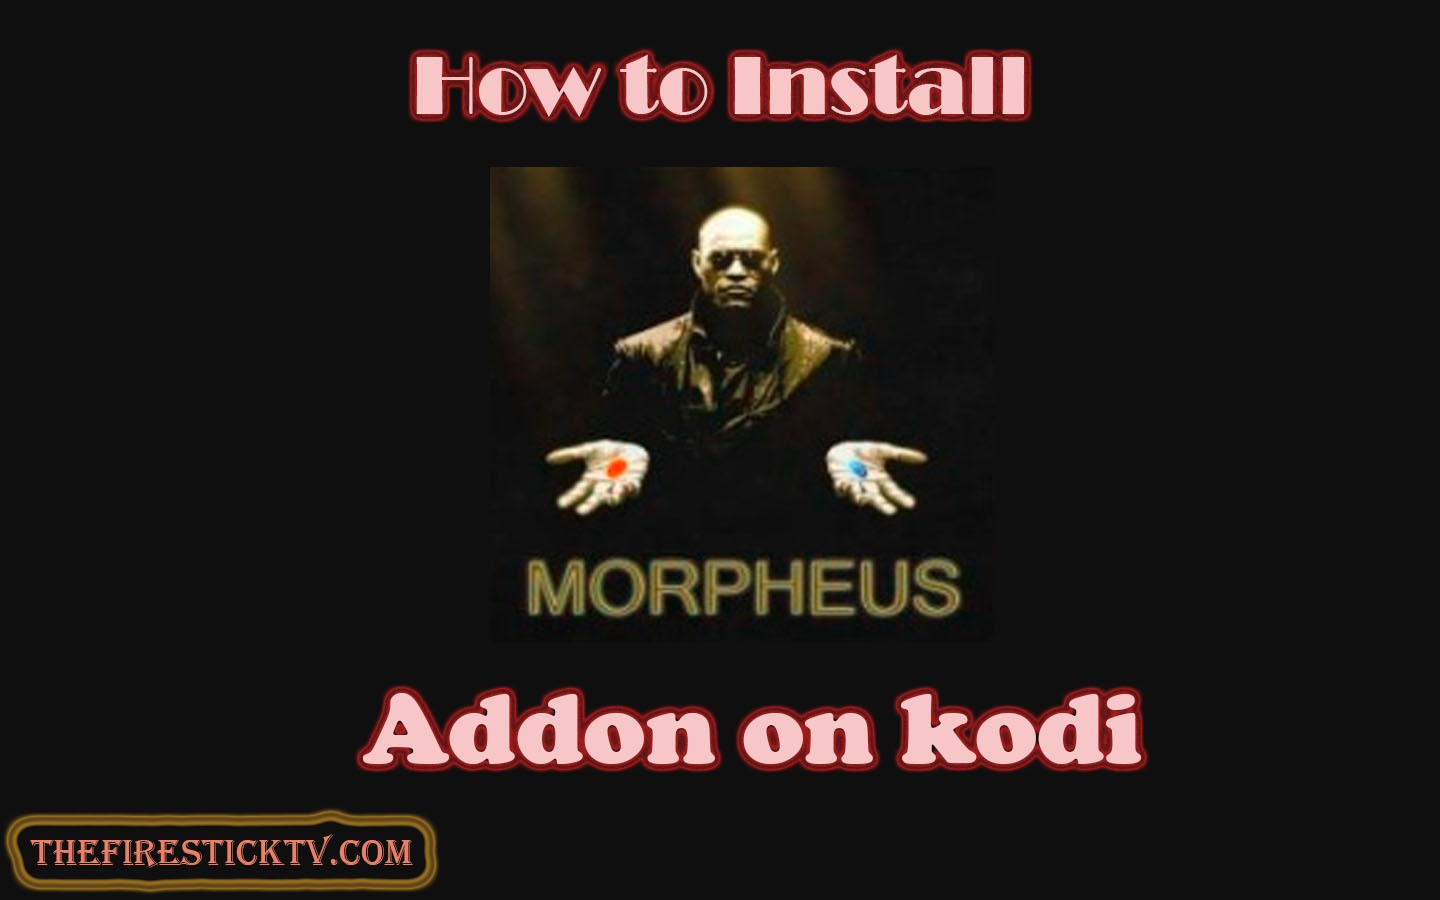 How to Install Morpheus Addon on Kodi 2021 - Easy 2 Steps to Install Morpheus Kodi Addon